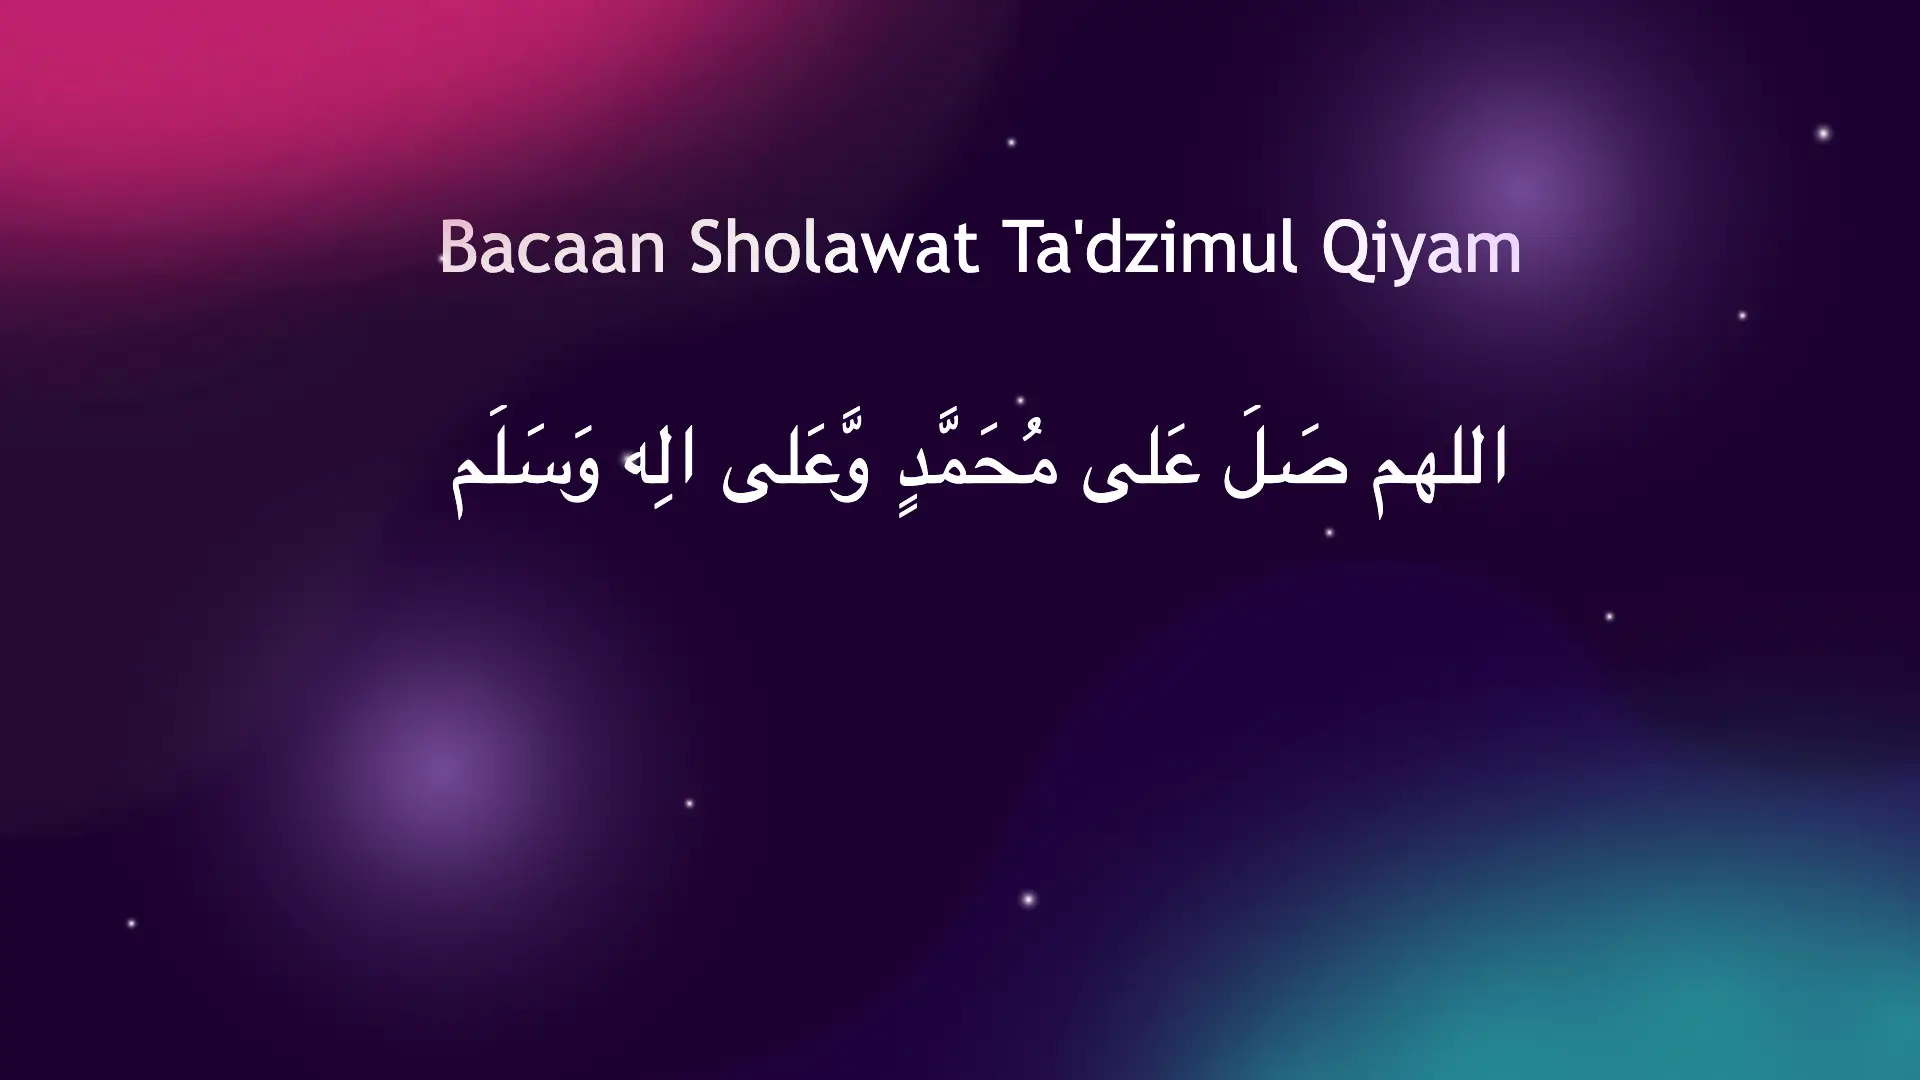 Bacaan sholawat Ta'dzimul Qiyam